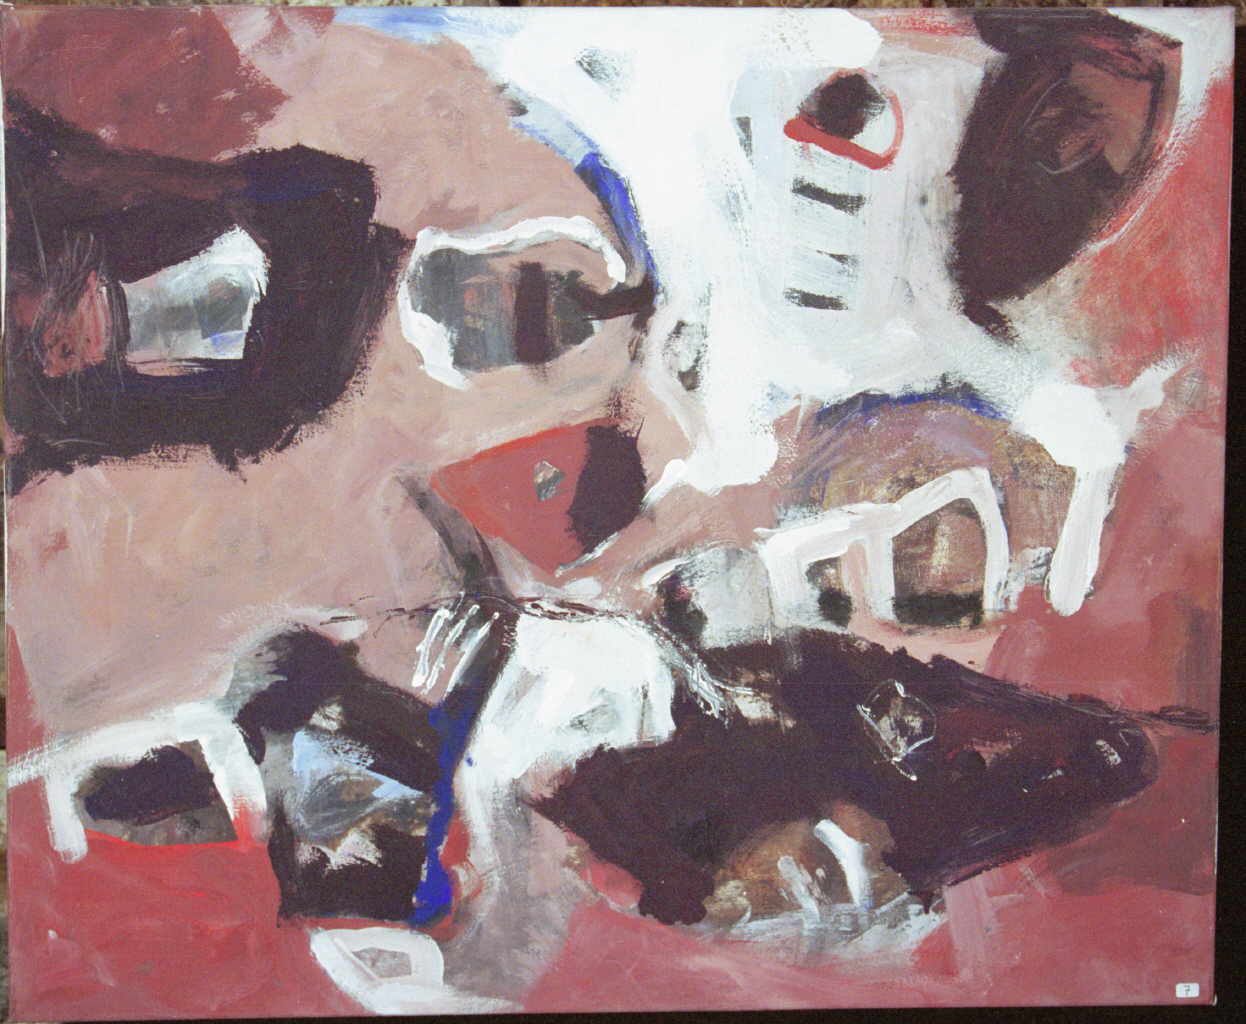 Schöttner Ilse 
"Stillleben", 1997
Acryl / Leinwand
70 x 85 cm